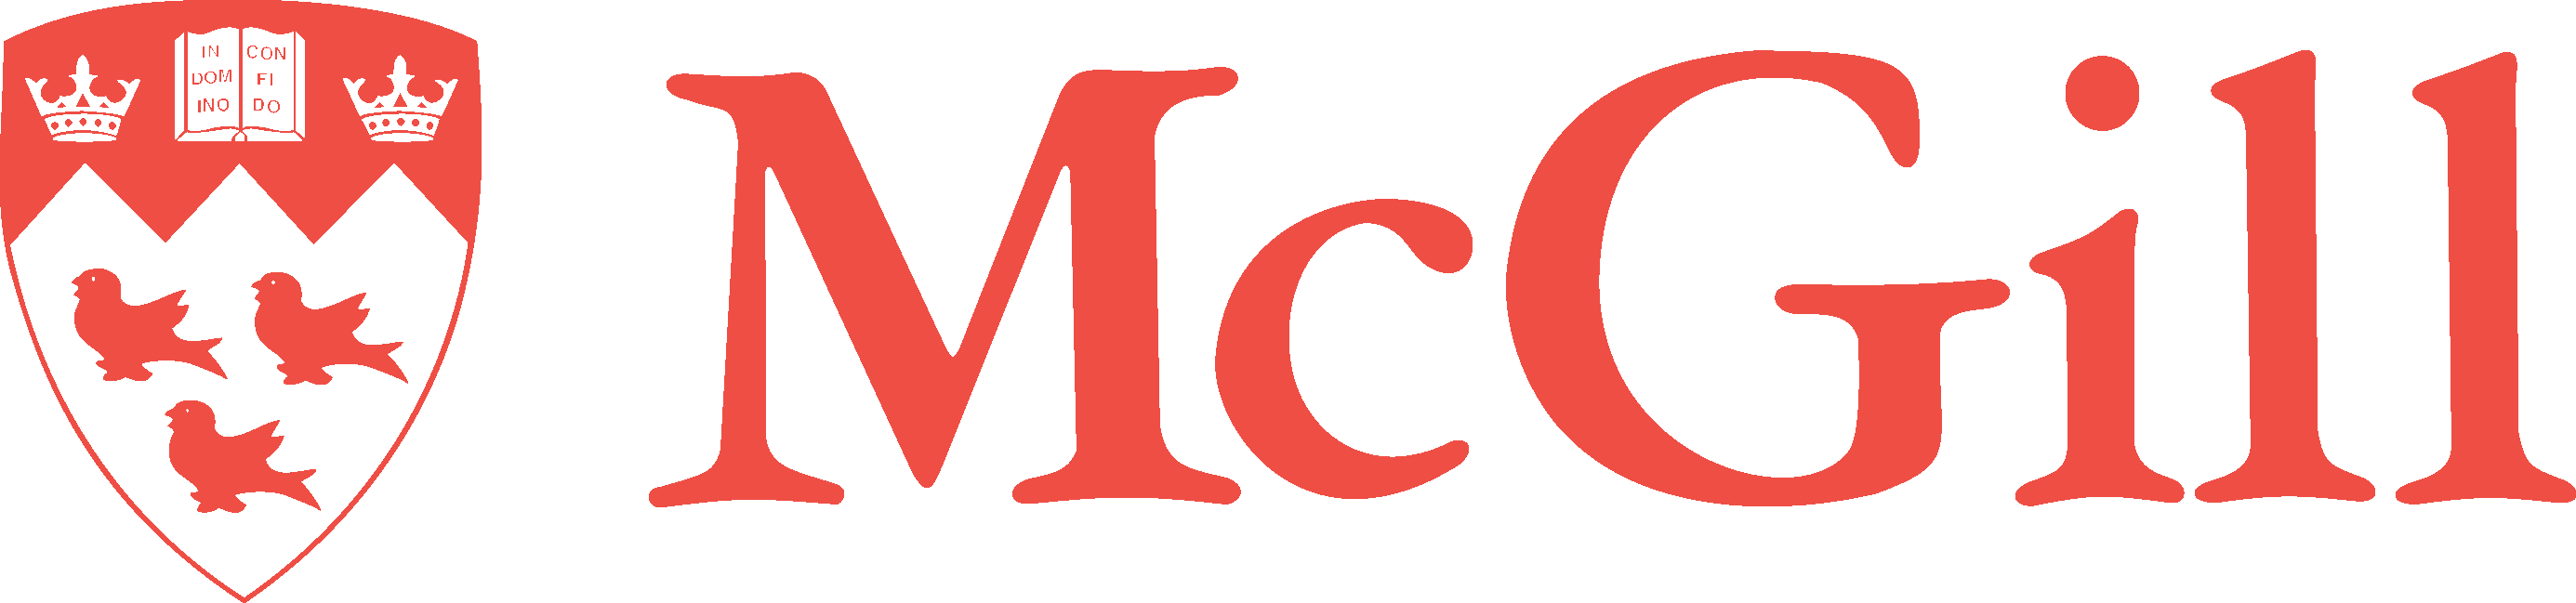 Mcgill Logo png